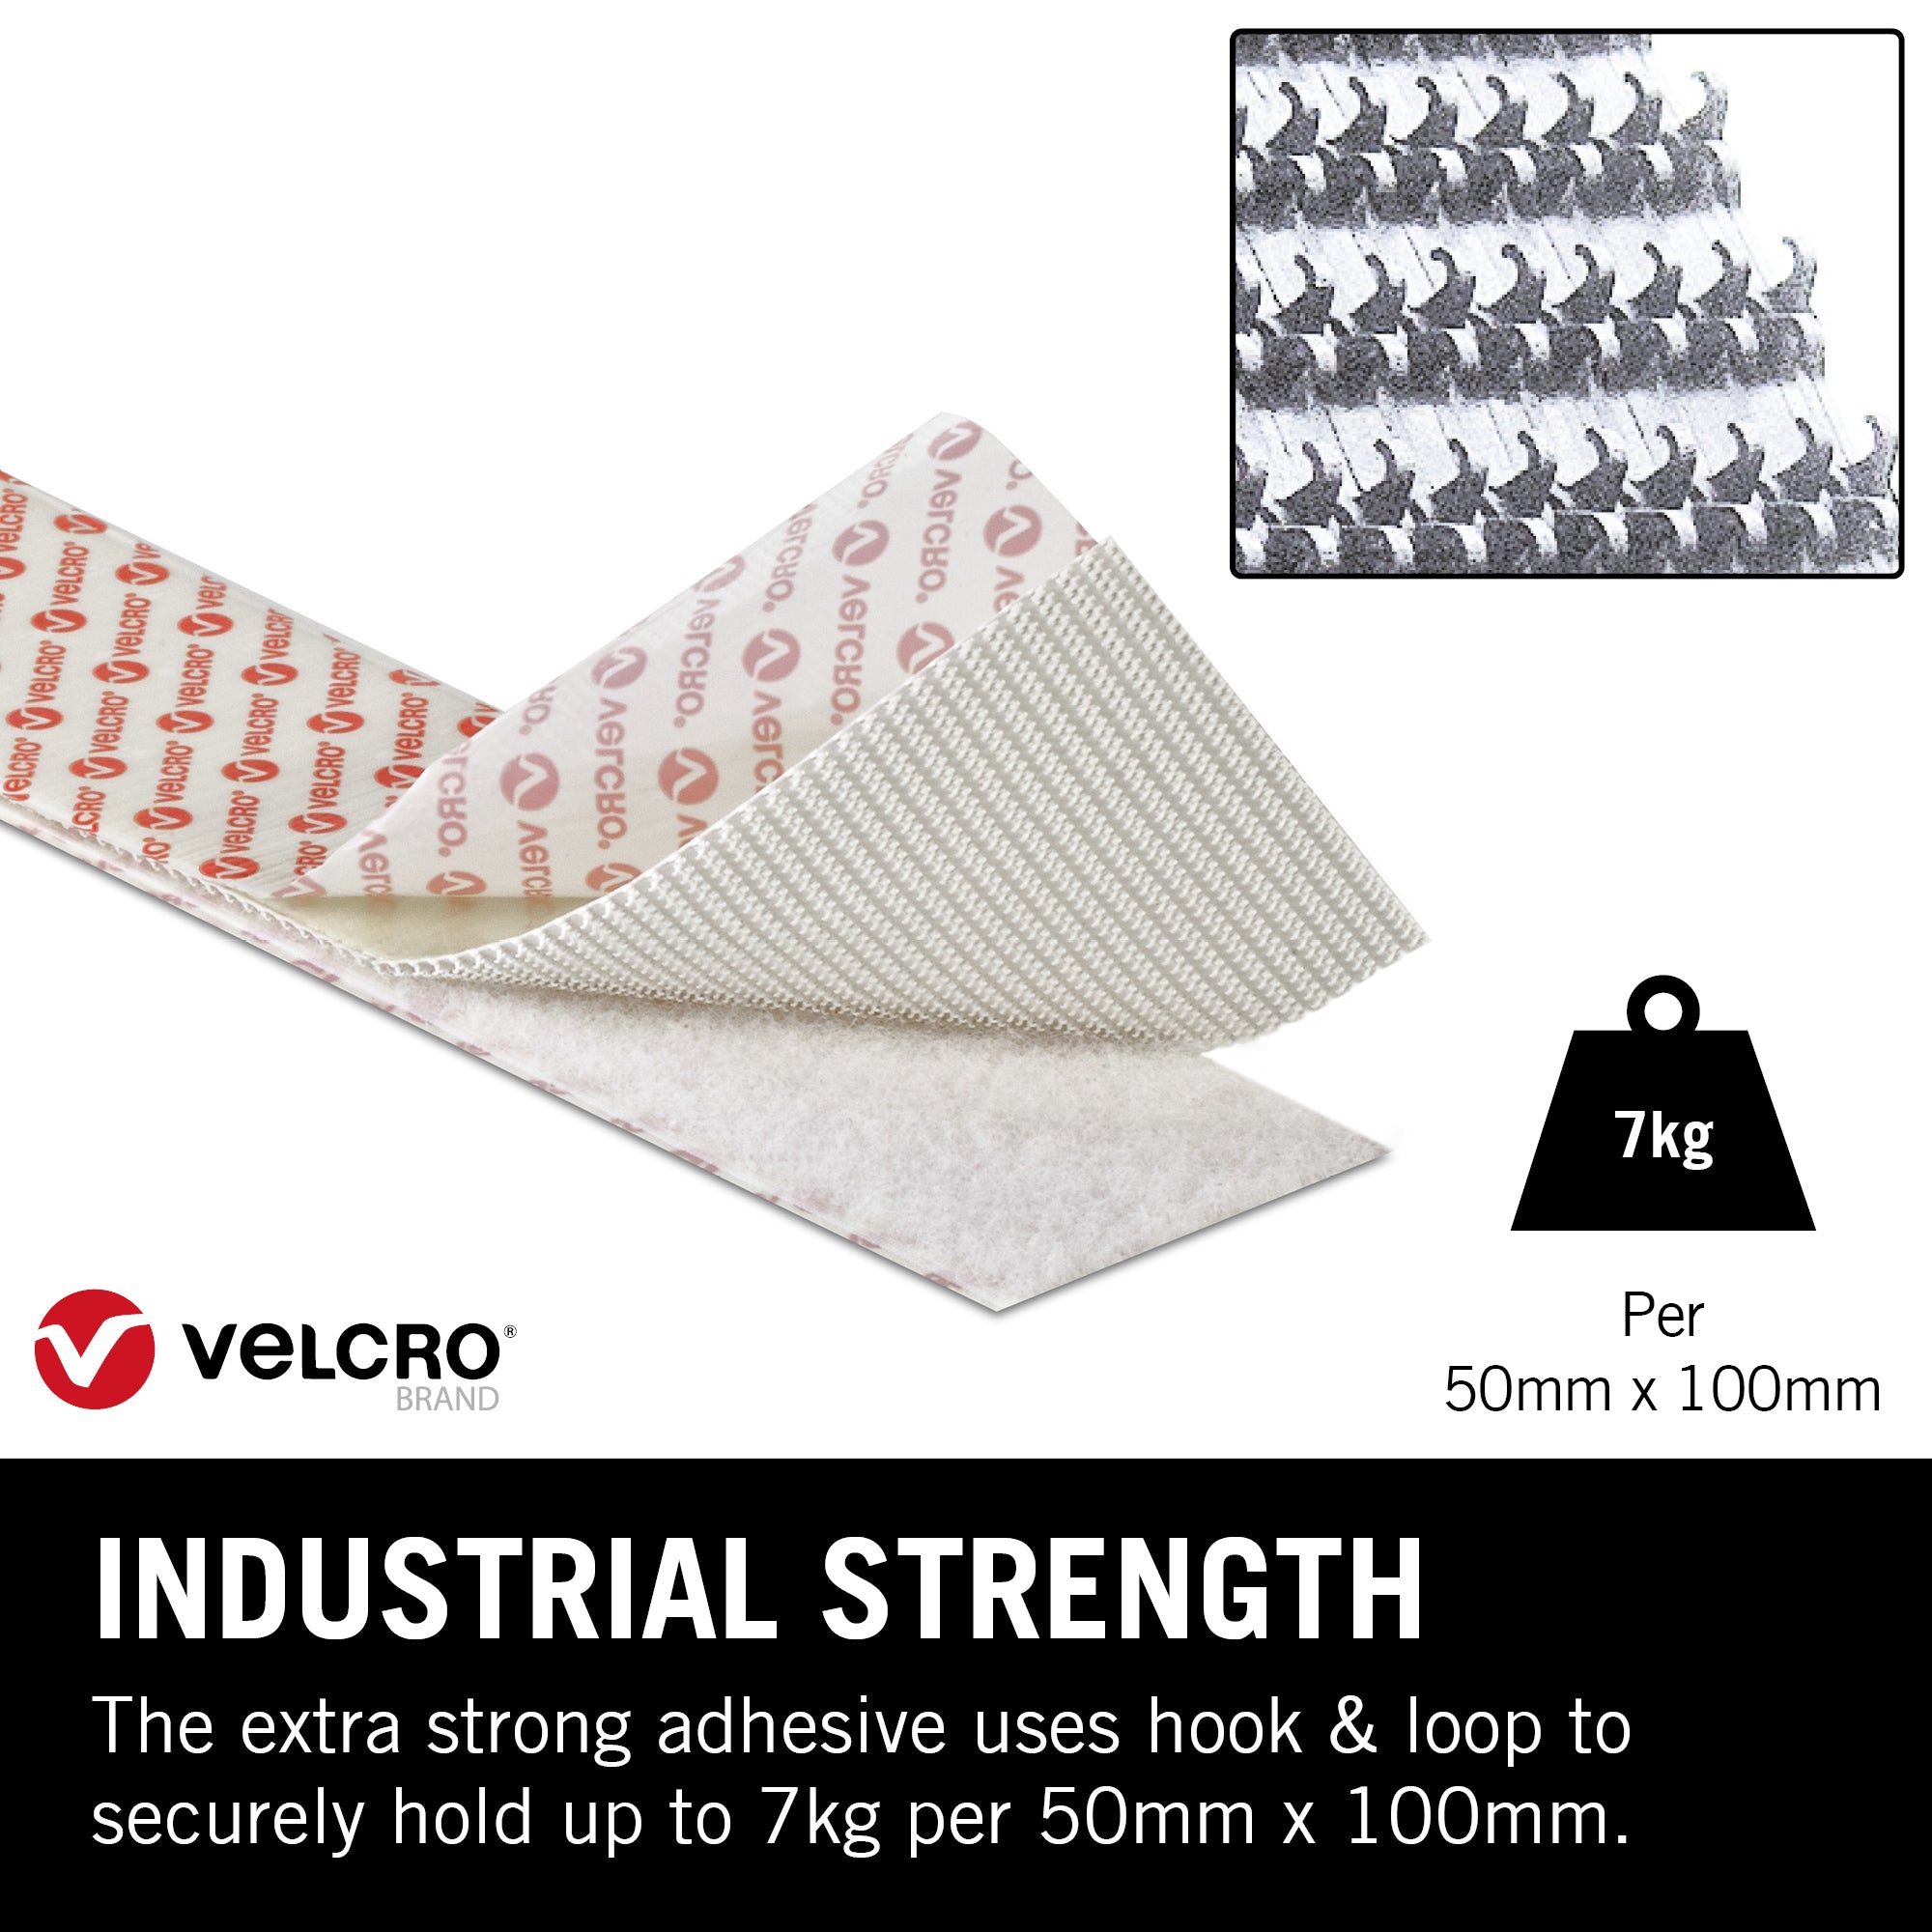 Velcro Industrial Strength Variety Pack - 1 Each